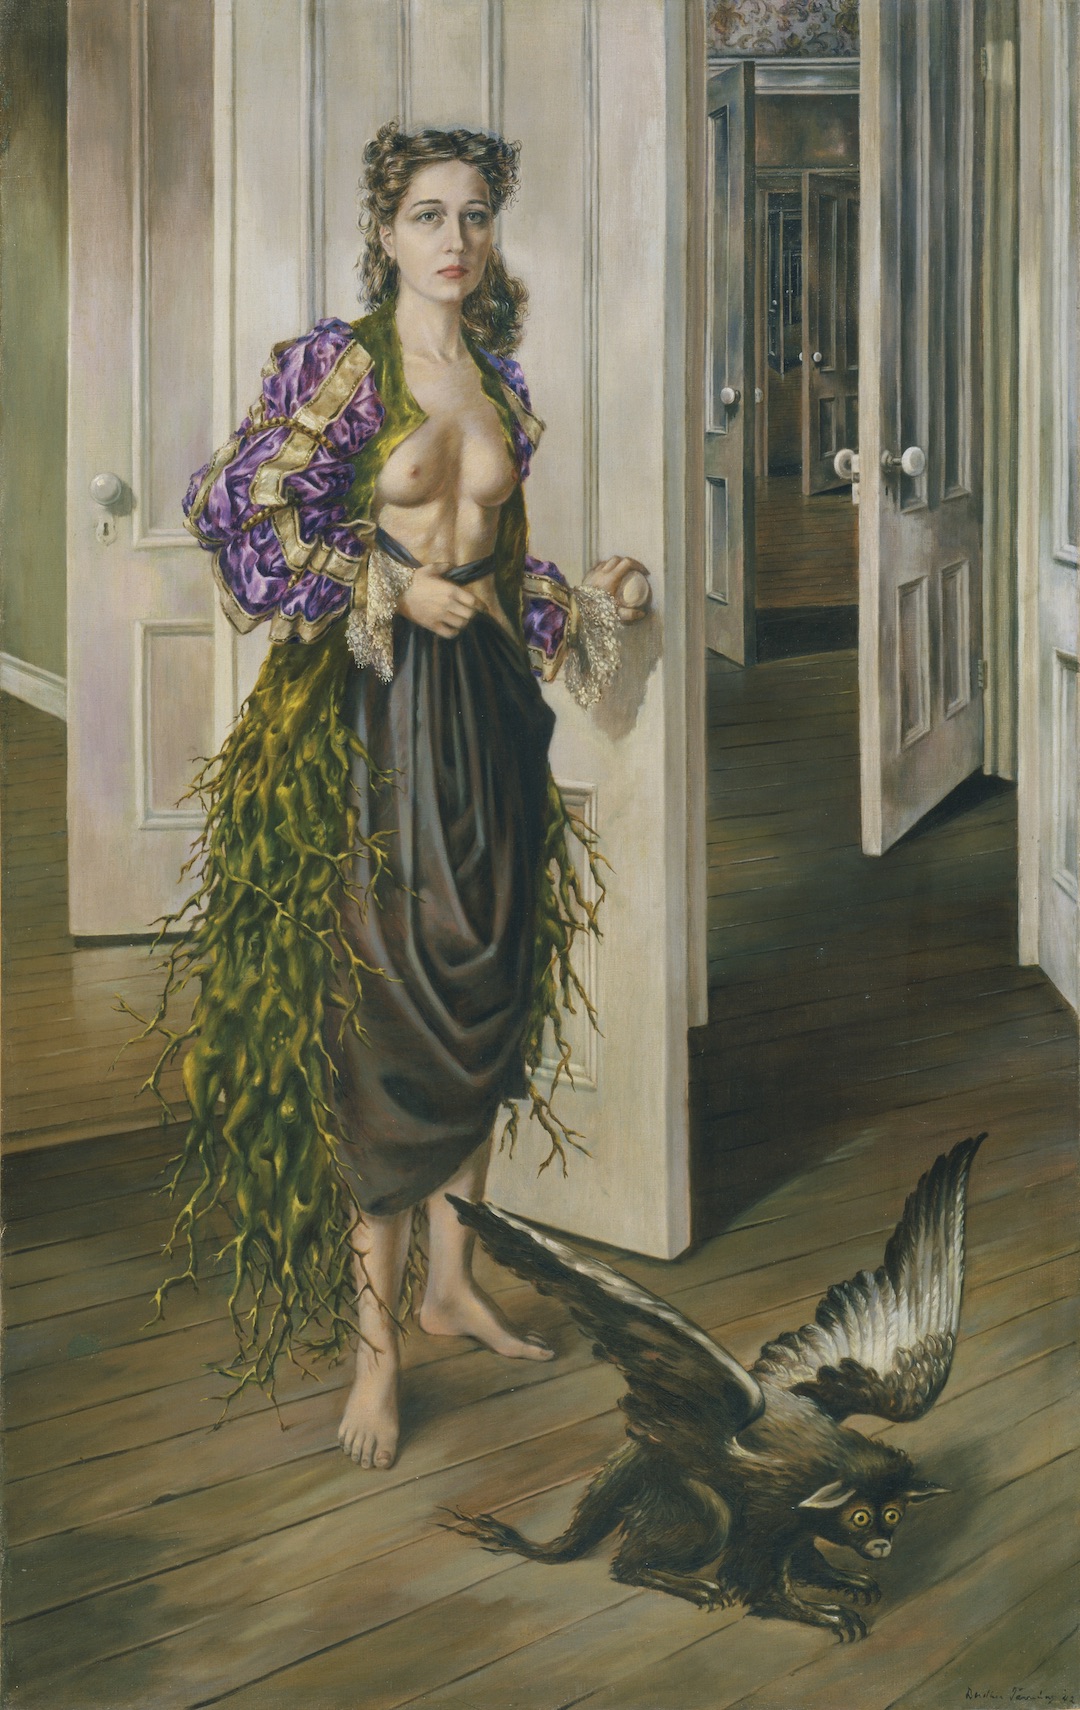 Dorothea Tanning, Birthday, 1942, oil on canvas, 40 ¼ x 25 ½ inches (Philadelphia Museum of Art)